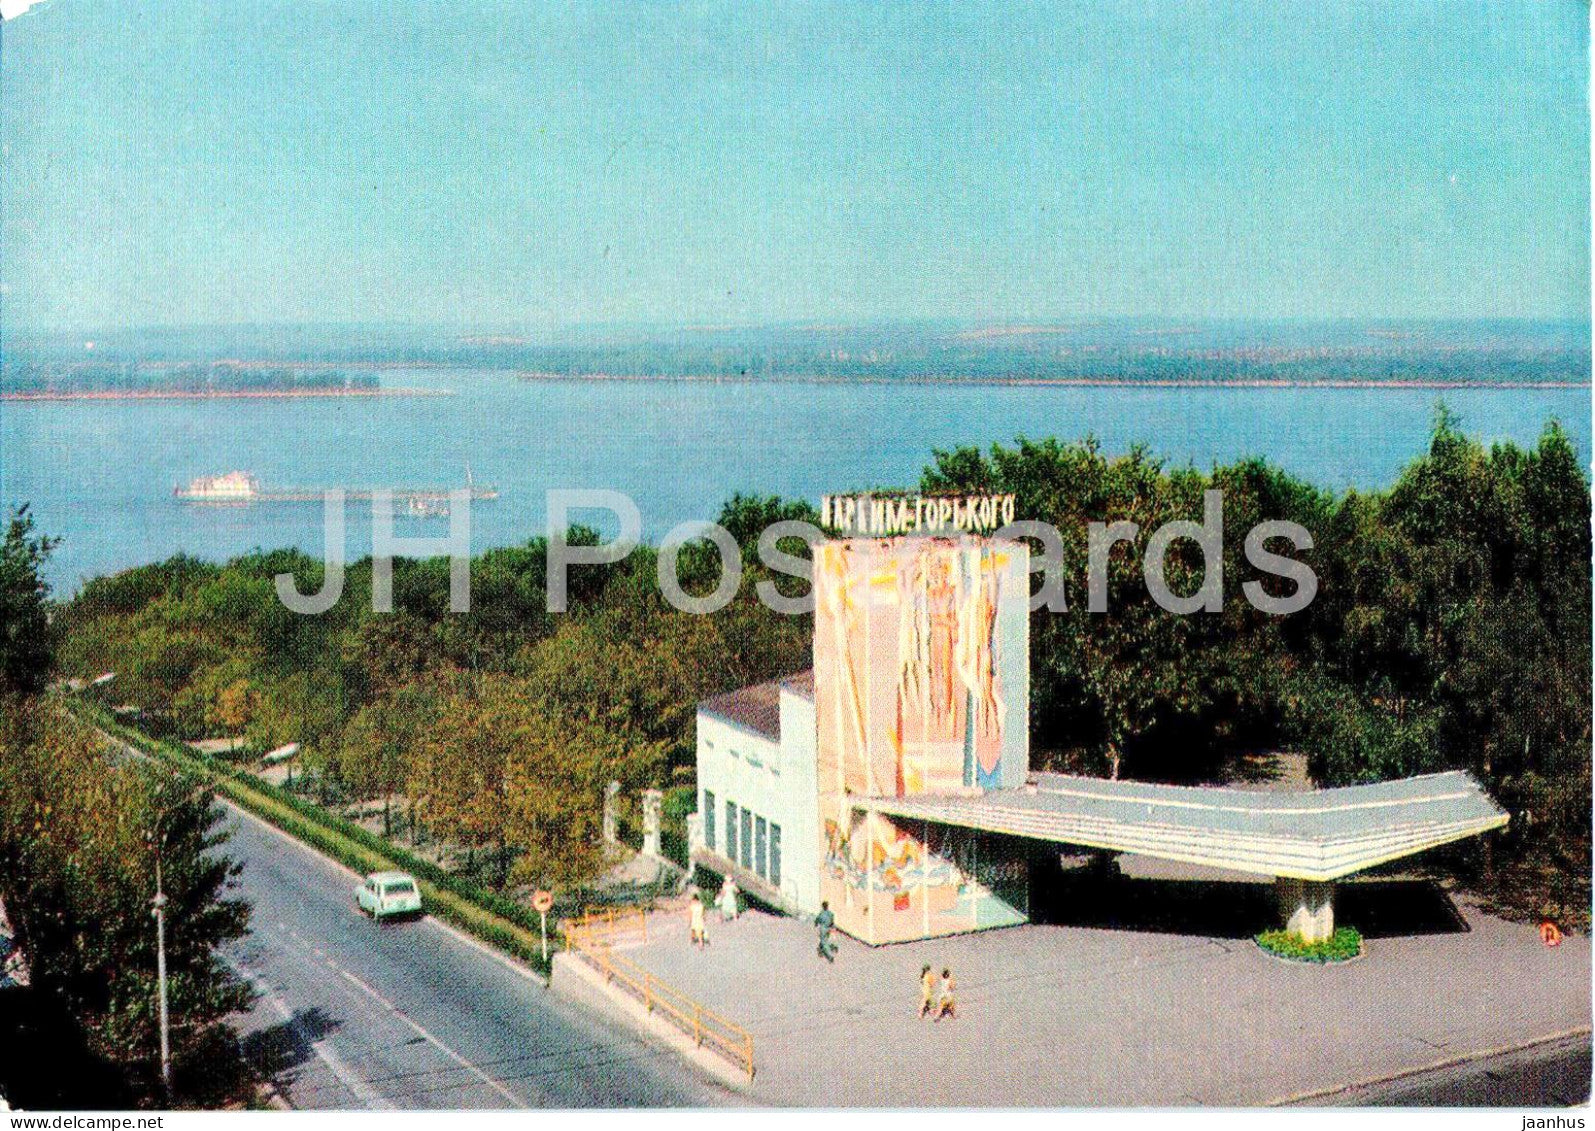 Kuybyshev - Samara - Gorky Culture Park - postal stationery - 1972 - Russia USSR - unused - JH Postcards